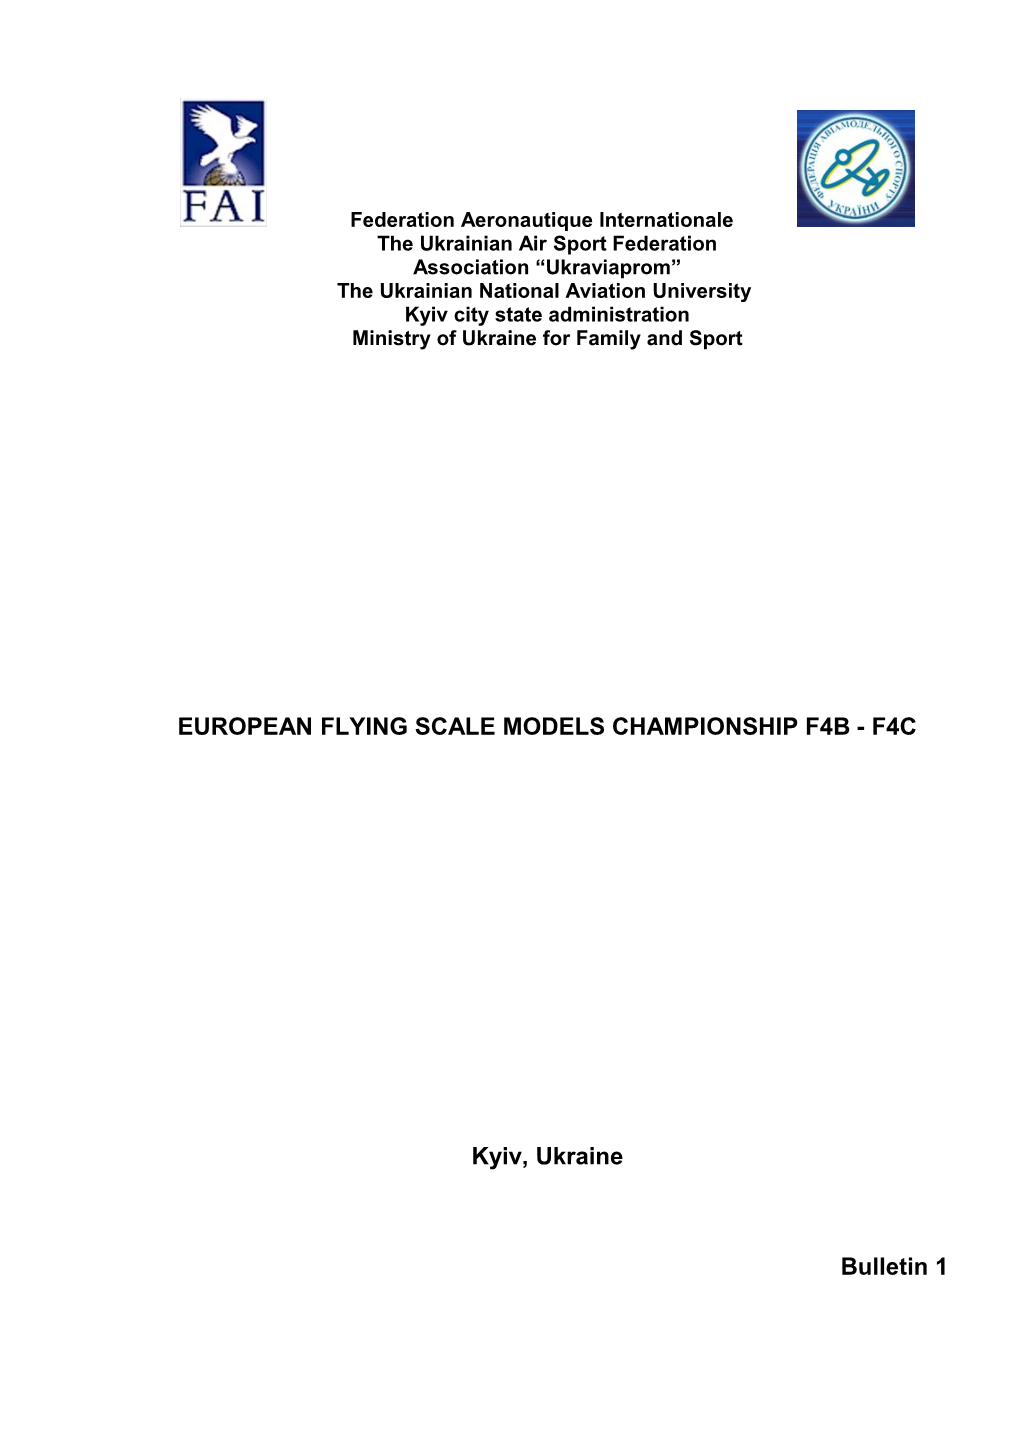 European Flying Scale Models Championship F4b - F4c